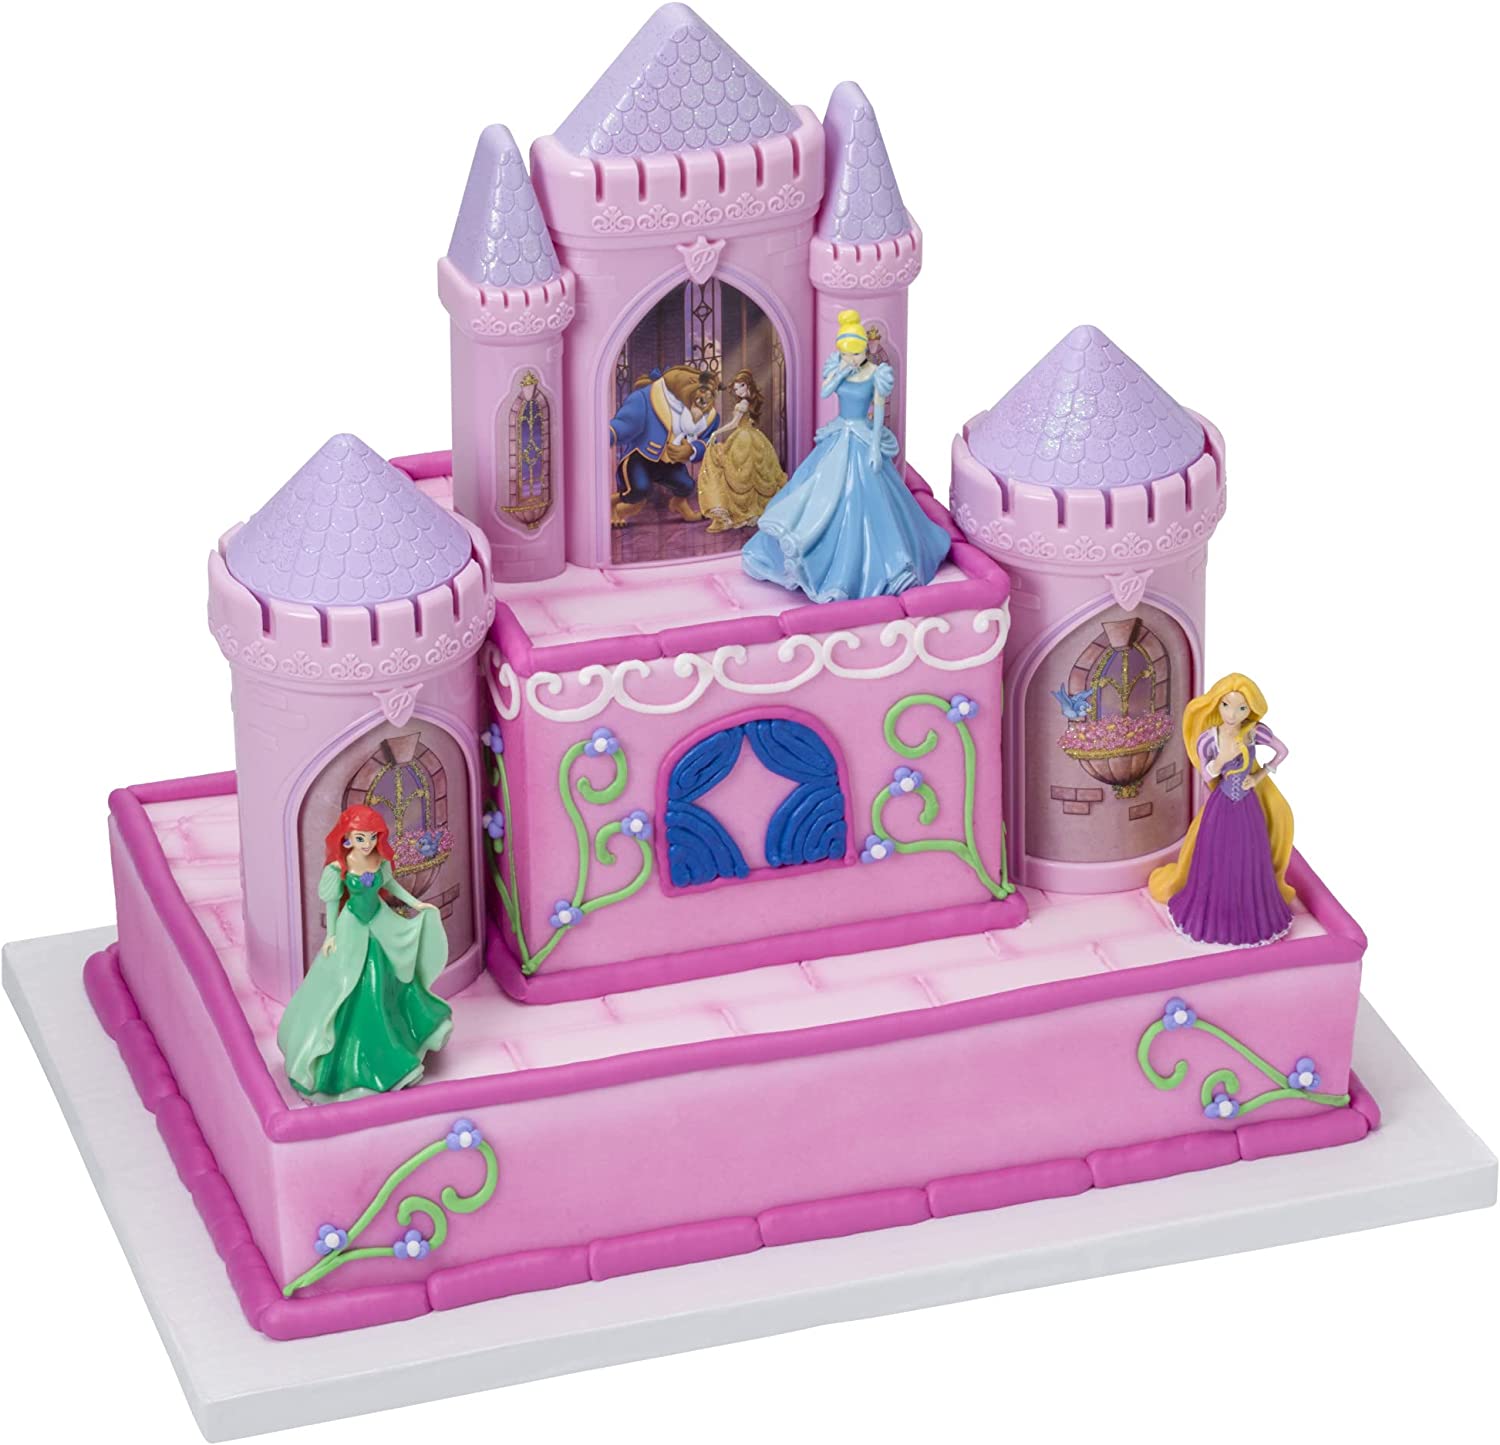 Princess Castle Cake Topper Set